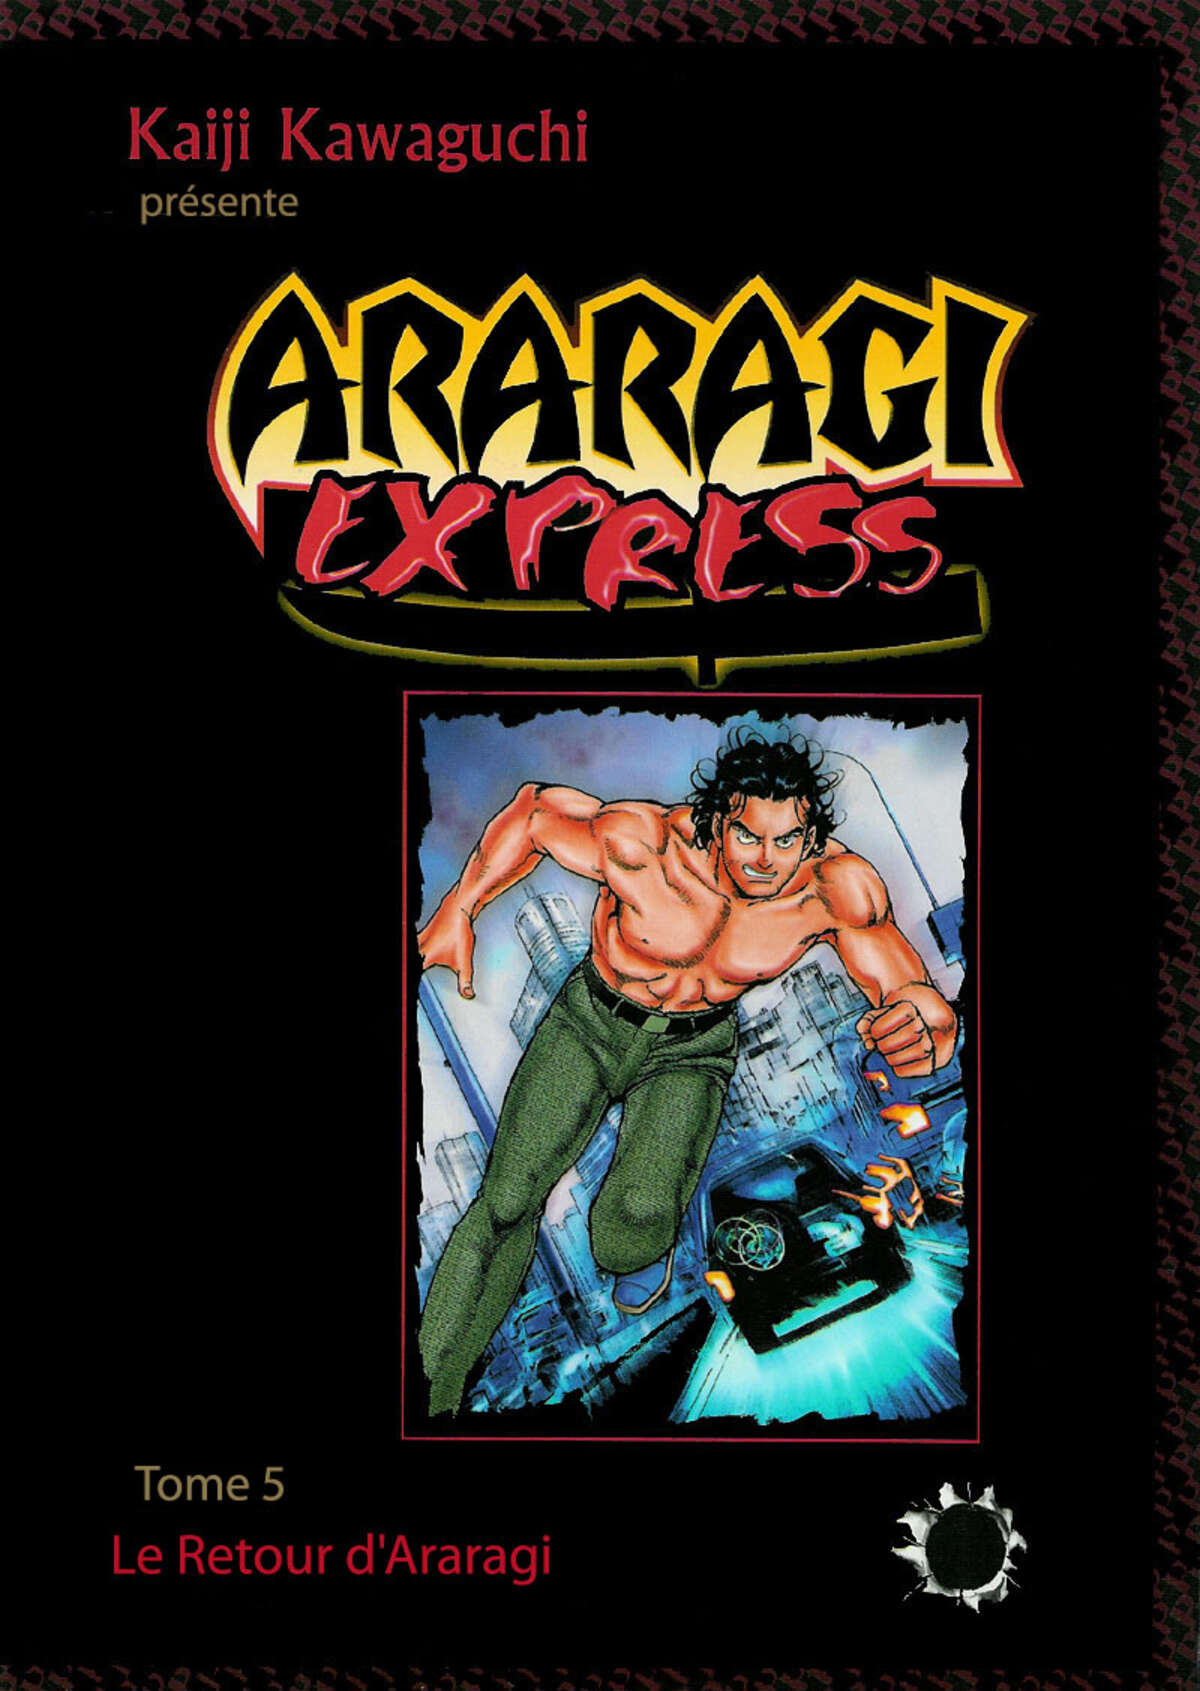 Araragi Express Volume 5 page 1